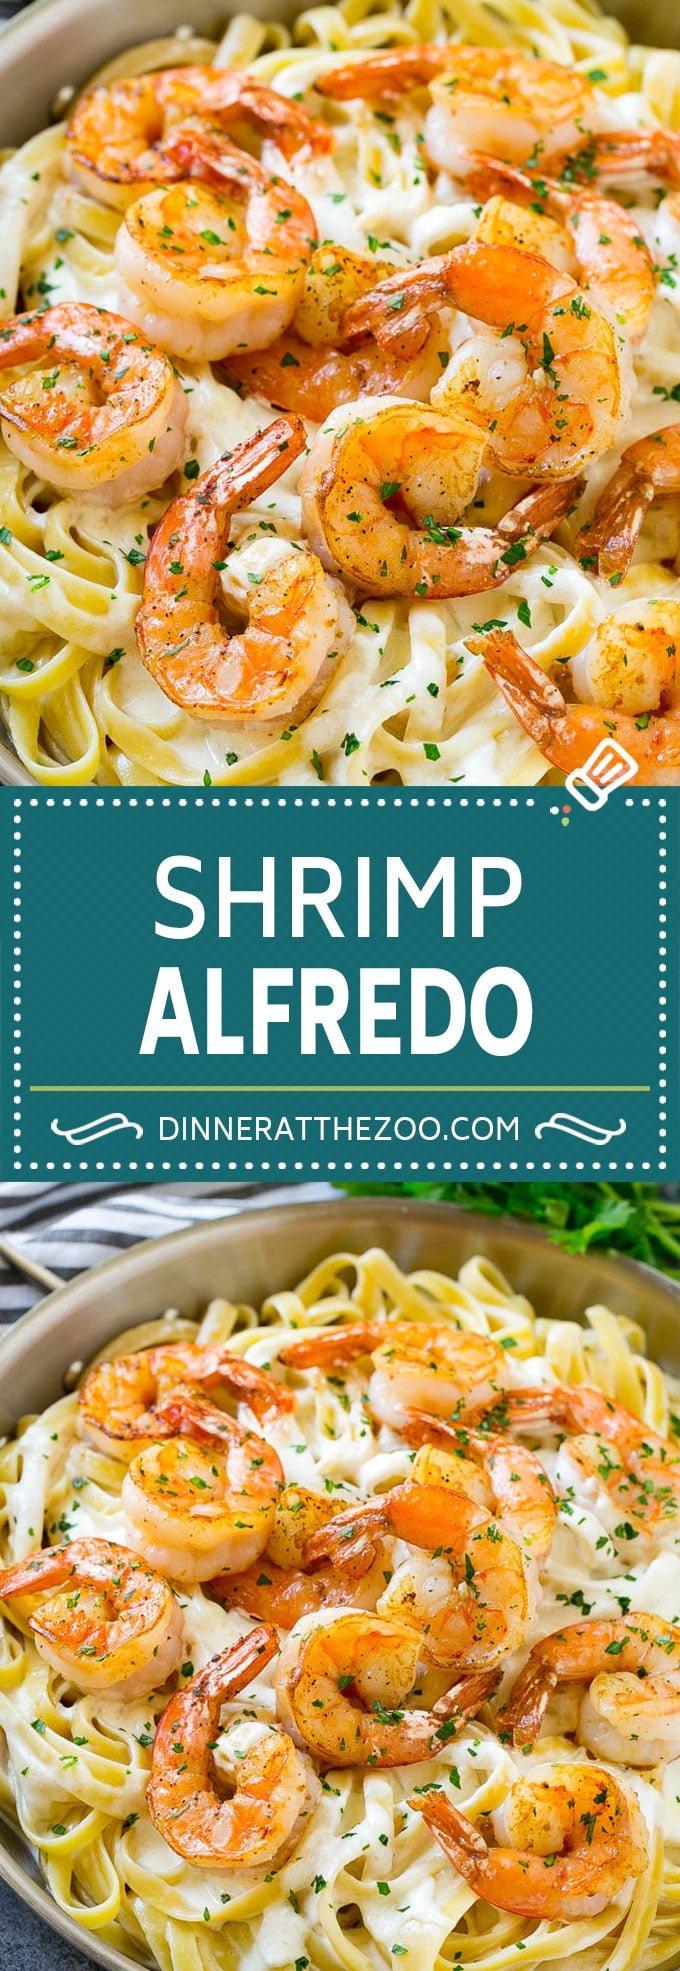 Shrimp Alfredo Recipe | Shrimp Alfredo Pasta | Shrimp Fettuccine Alfredo #shrimp #pasta #italianfood #dinneratthezoo